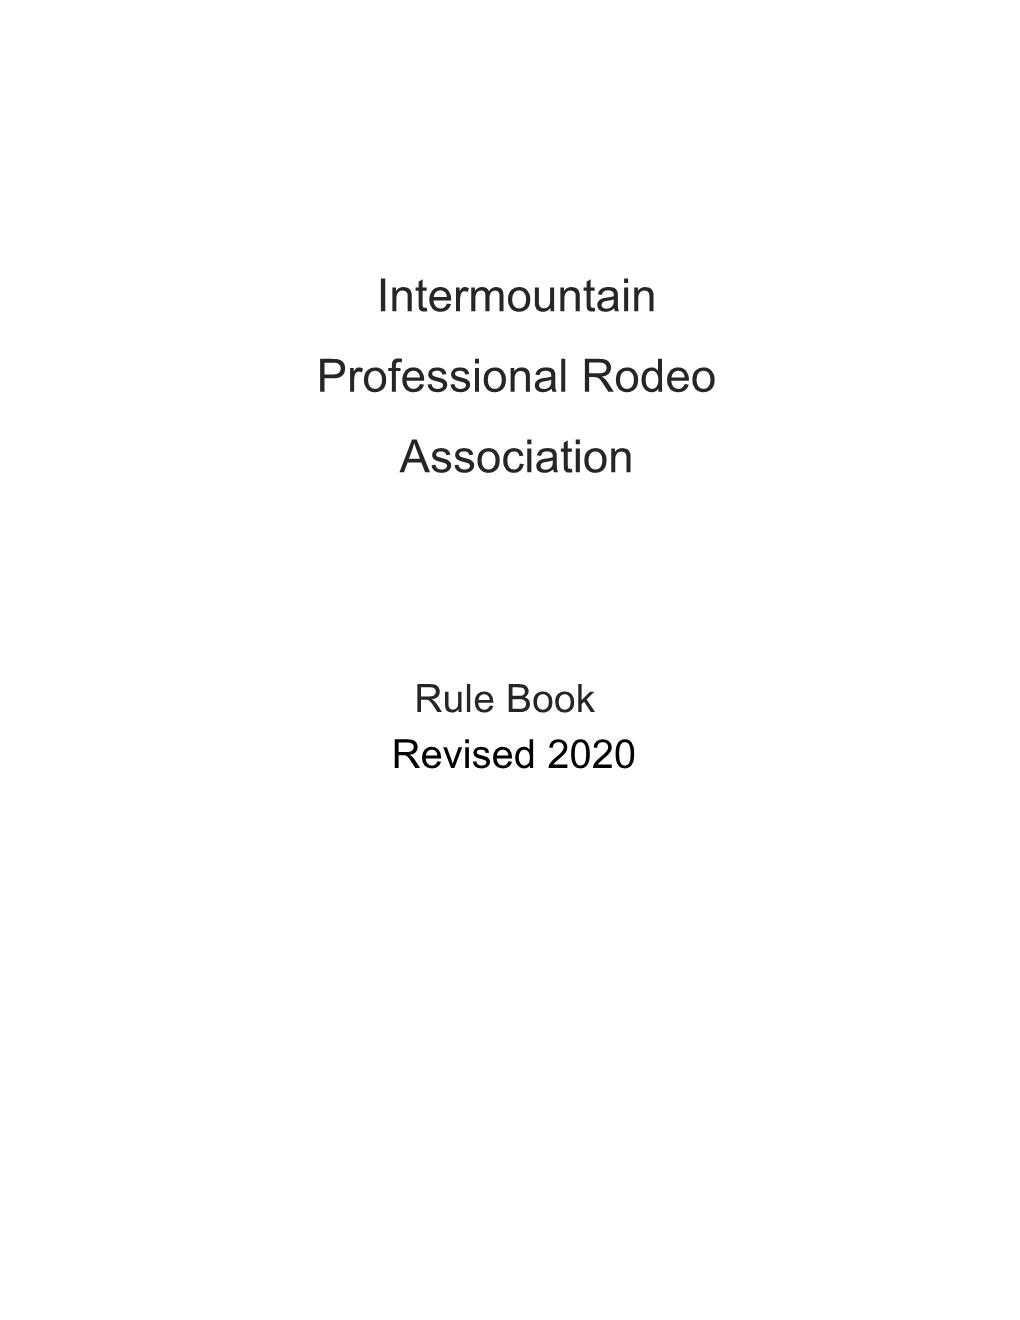 Intermountain Professional Rodeo Association